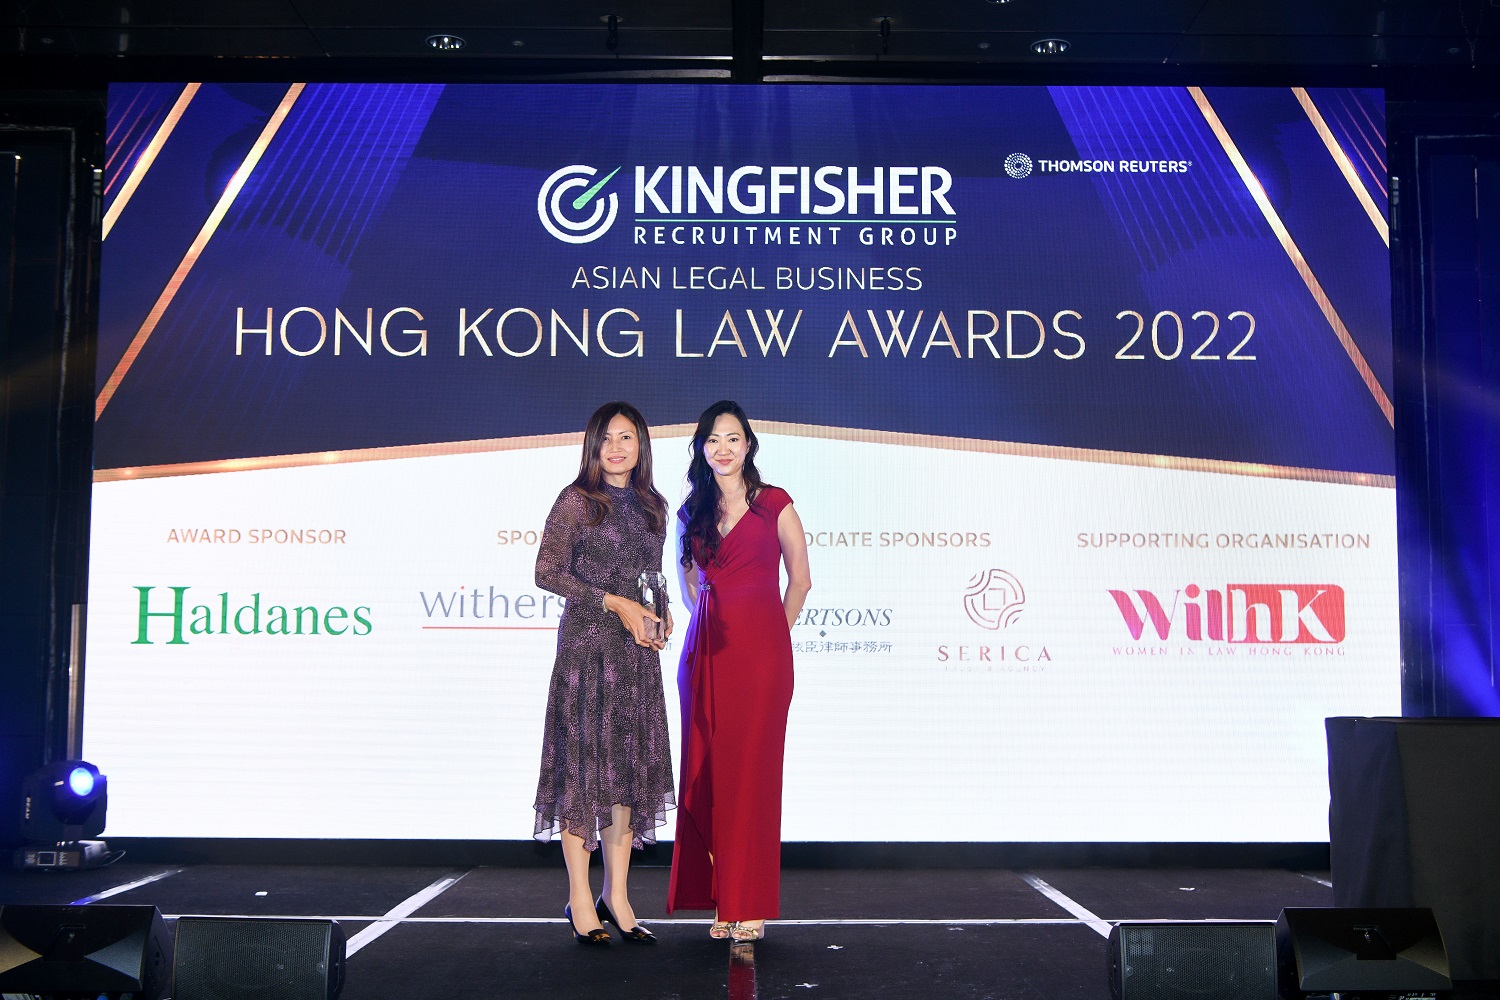 Kingfisher ALB Hong Kong Law Awards 2022 Asian Legal Business